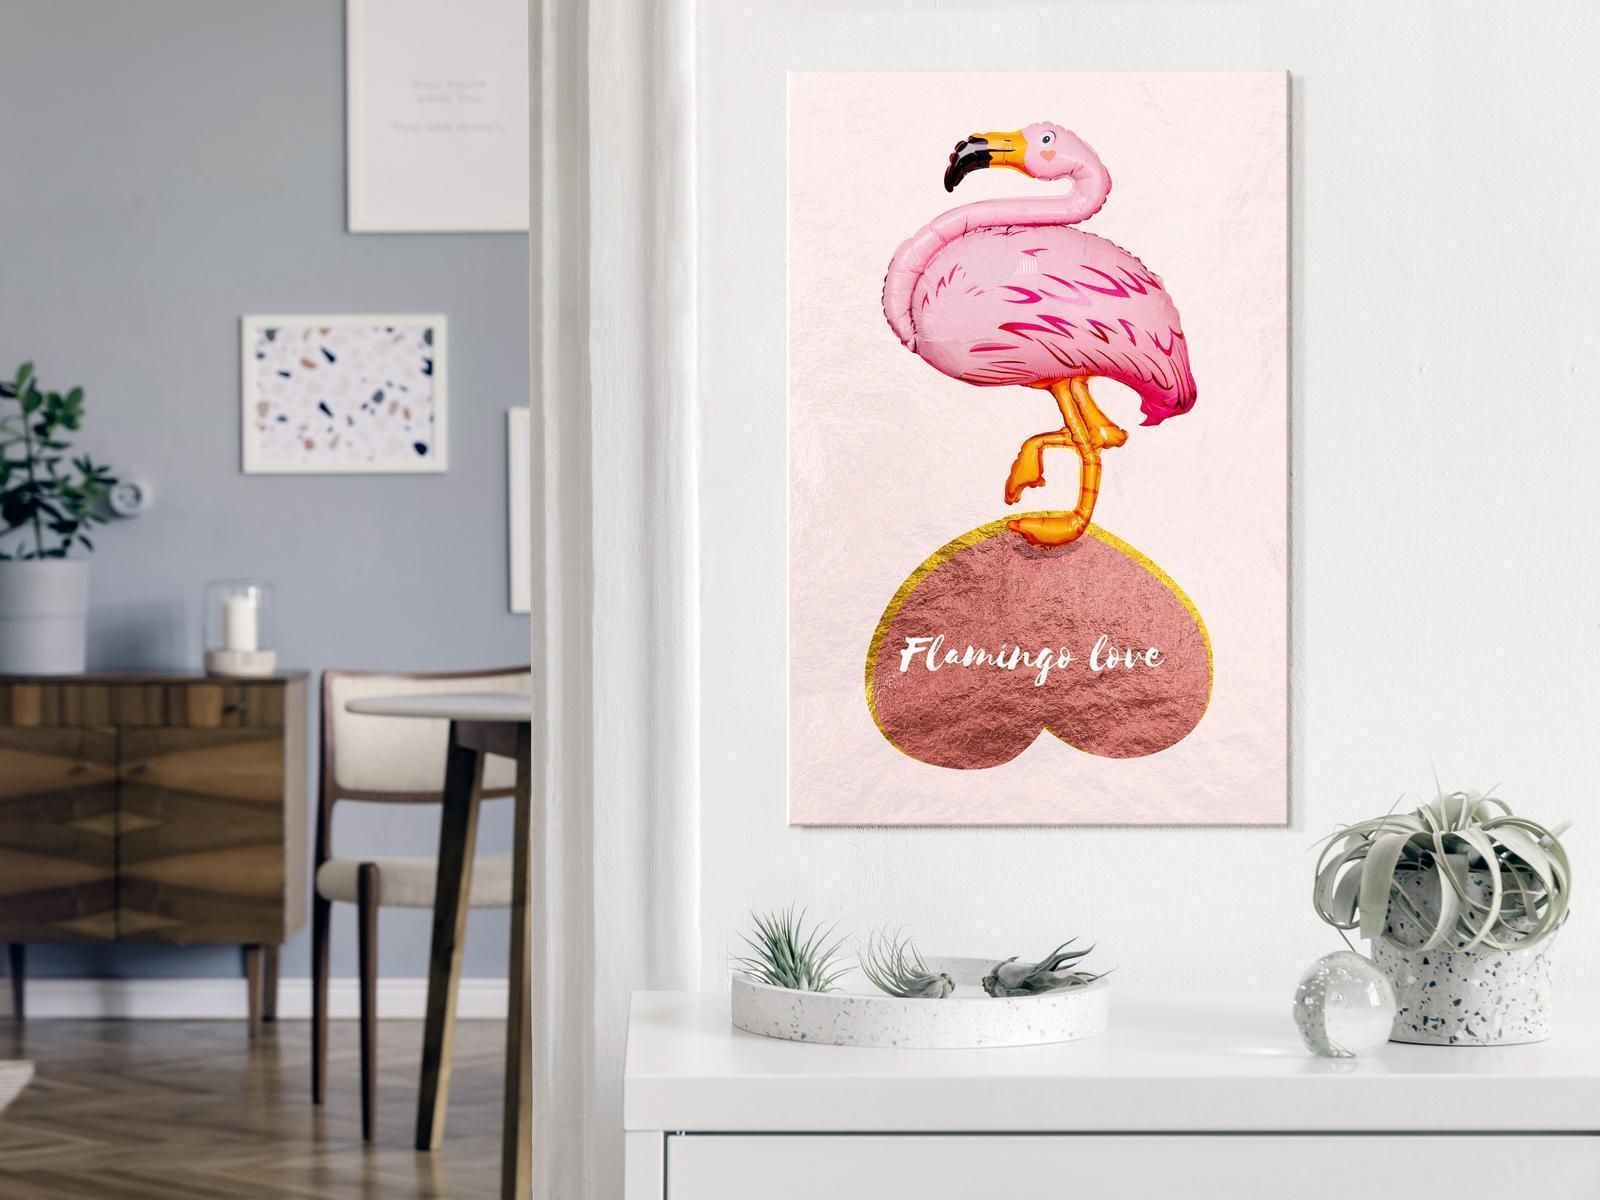 Tableau - Flamingo in Love (1 Part) Vertical